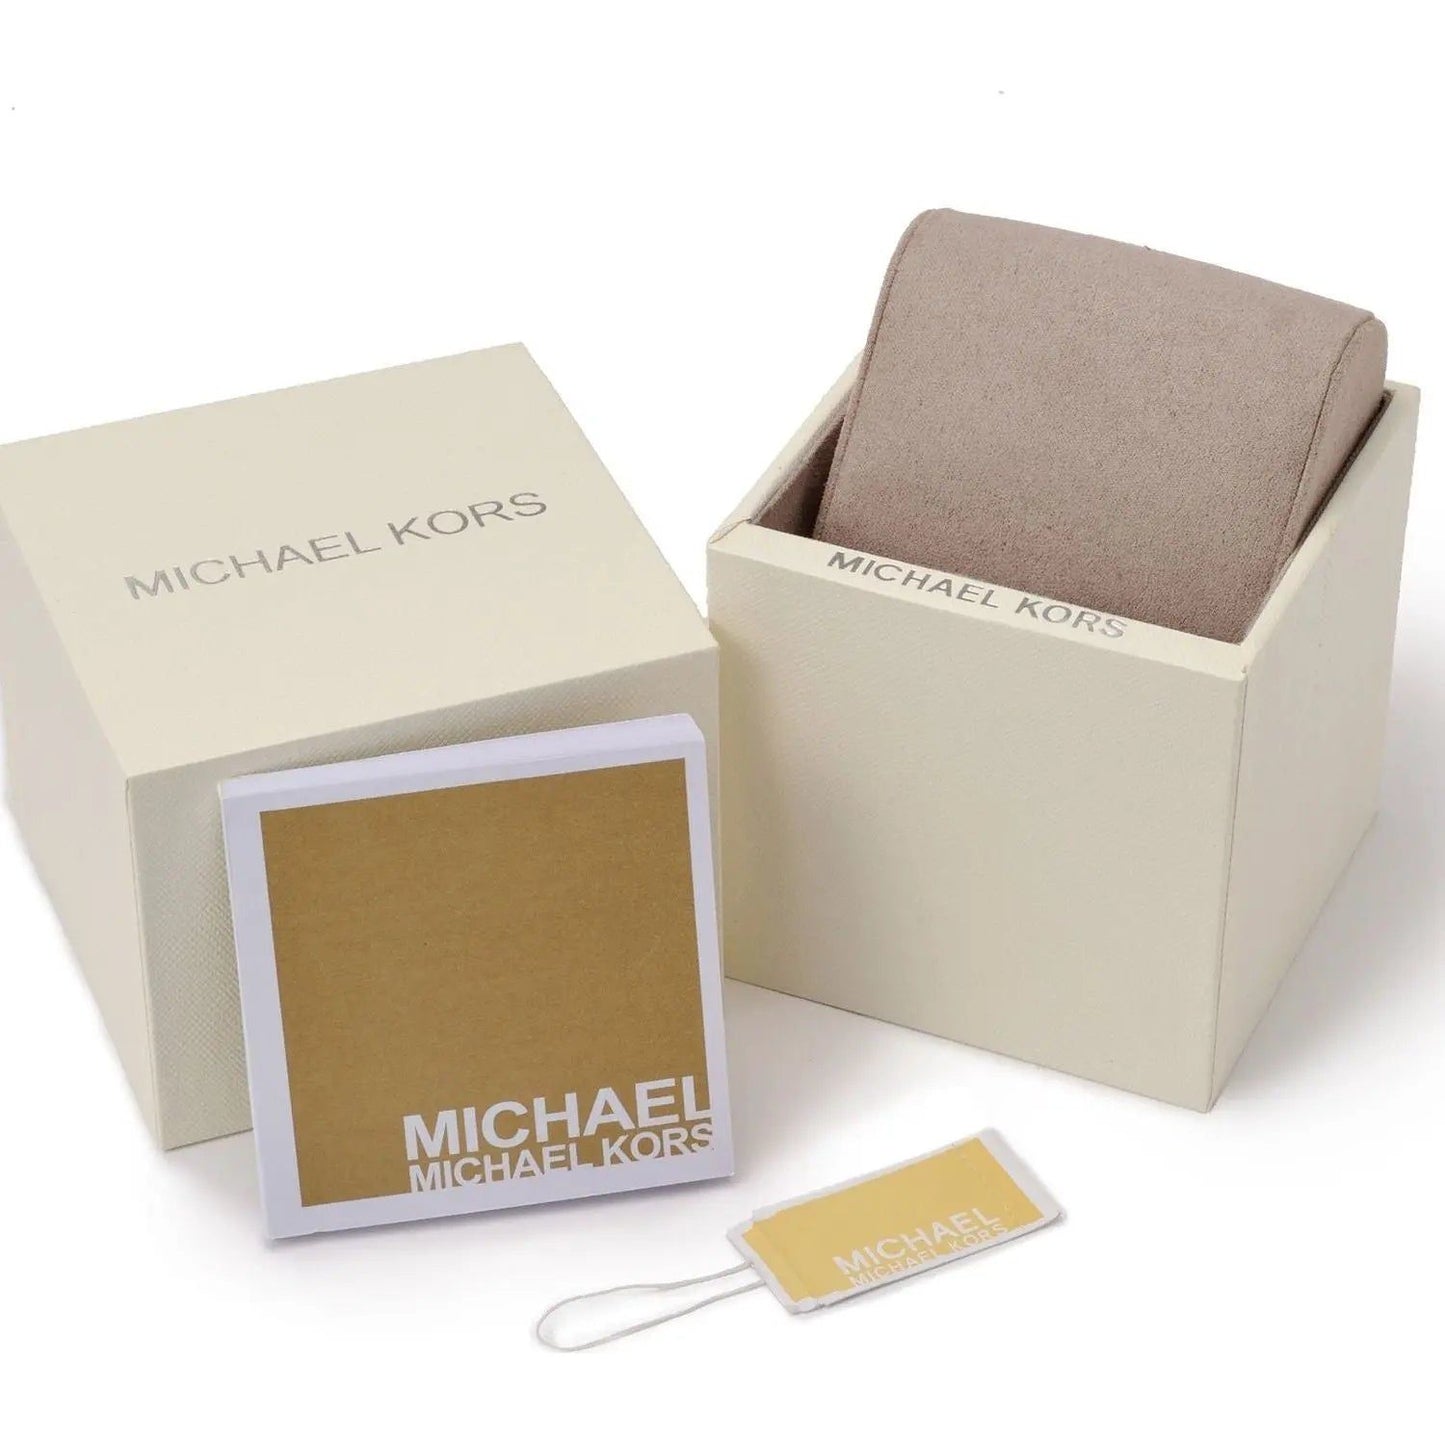 MICHAEL KORS MICHAEL KORS WATCHES Mod. MK7151 WATCHES michael-kors-watches-mod-mk7151 MICHAEL-KORS-_-MICHAEL-KORS-WATCHES-Mod.-MK7151-_-McRichard-Designer-Brands-118777782.jpg